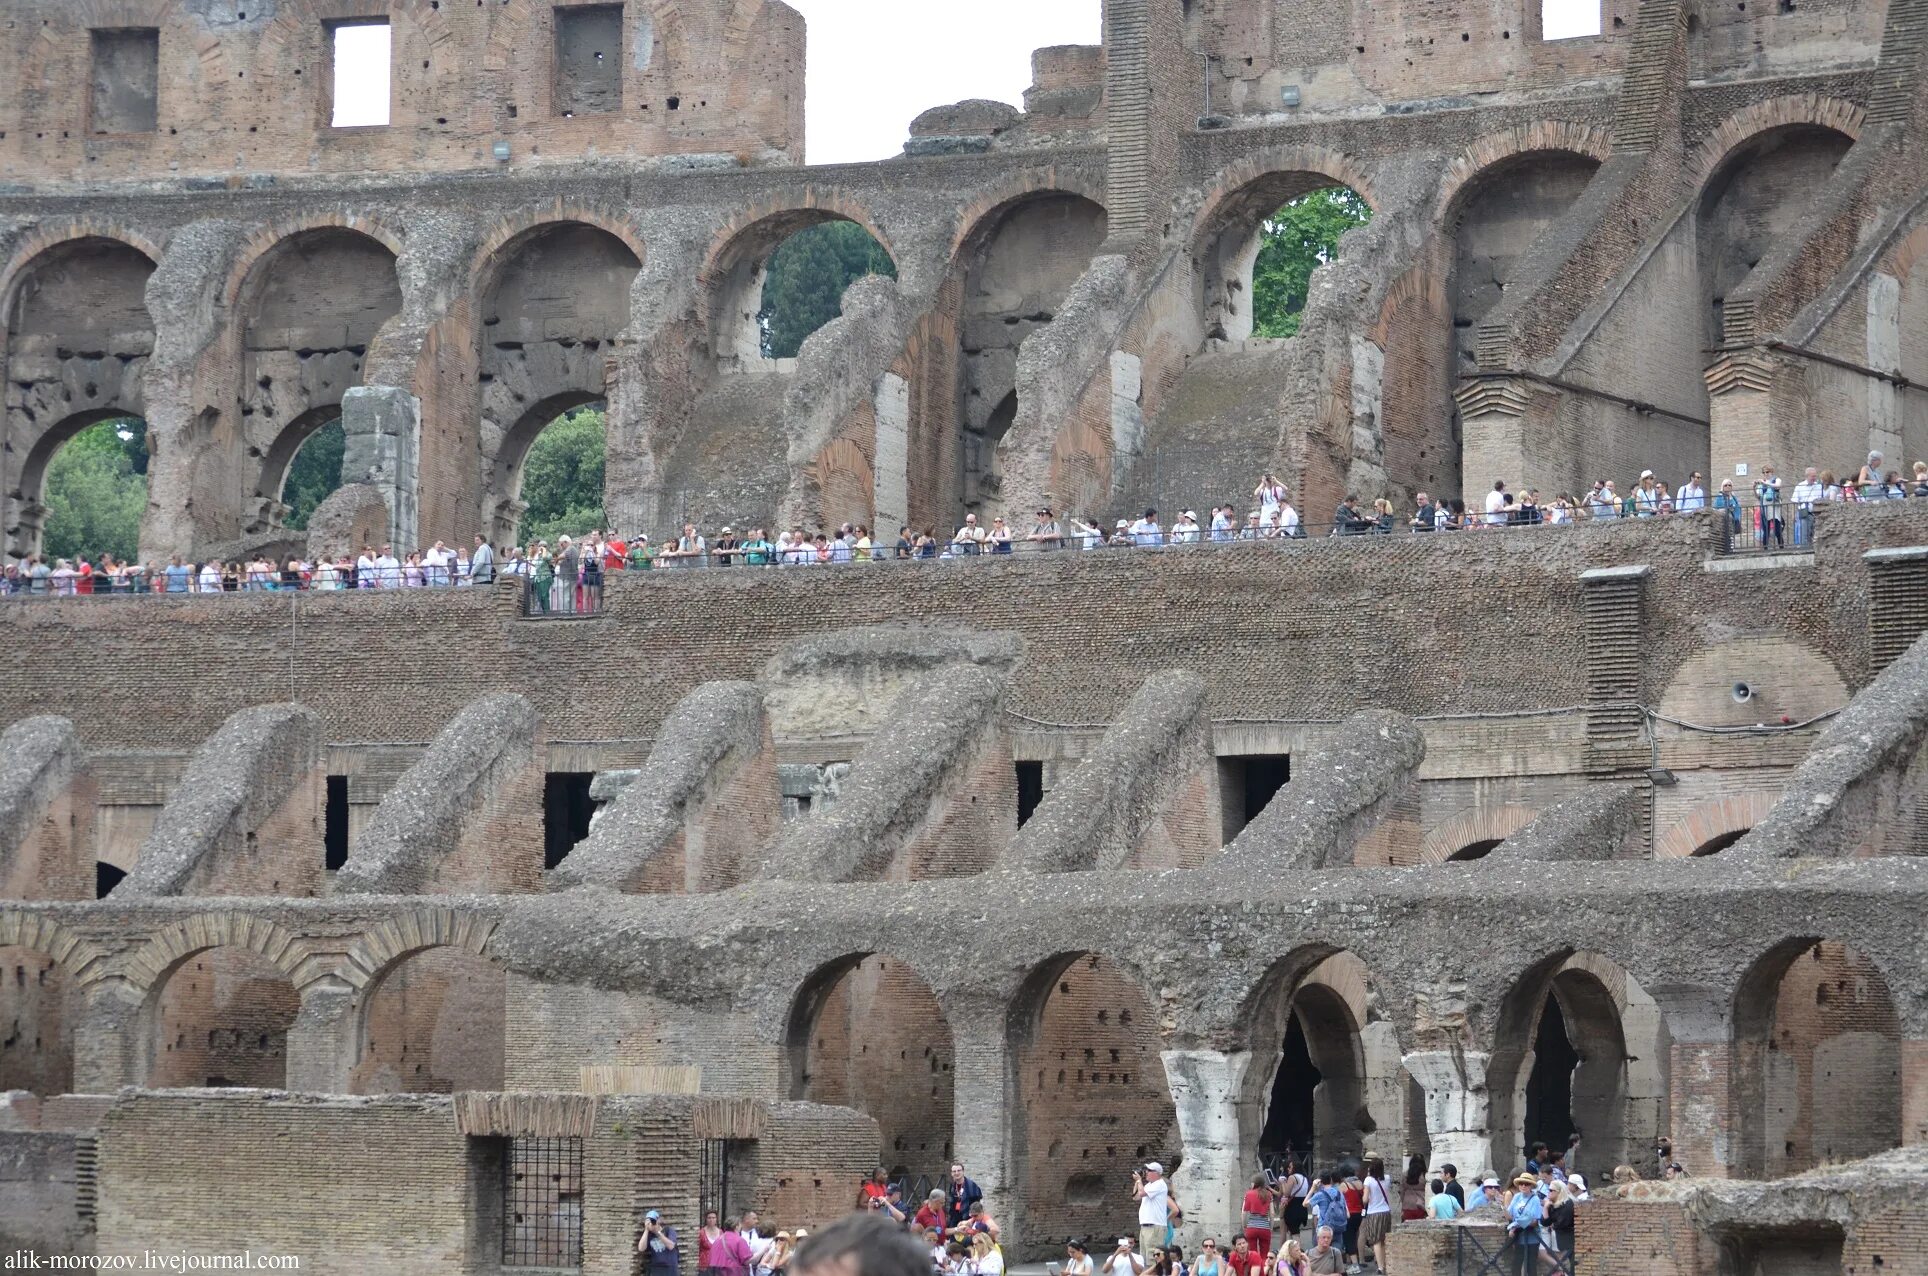 Рим Колизей внутри. Амфитеатр Колизей внутри. Колизей в Риме фото внутри. Колизей внутри в древнем Риме. Стена колизея